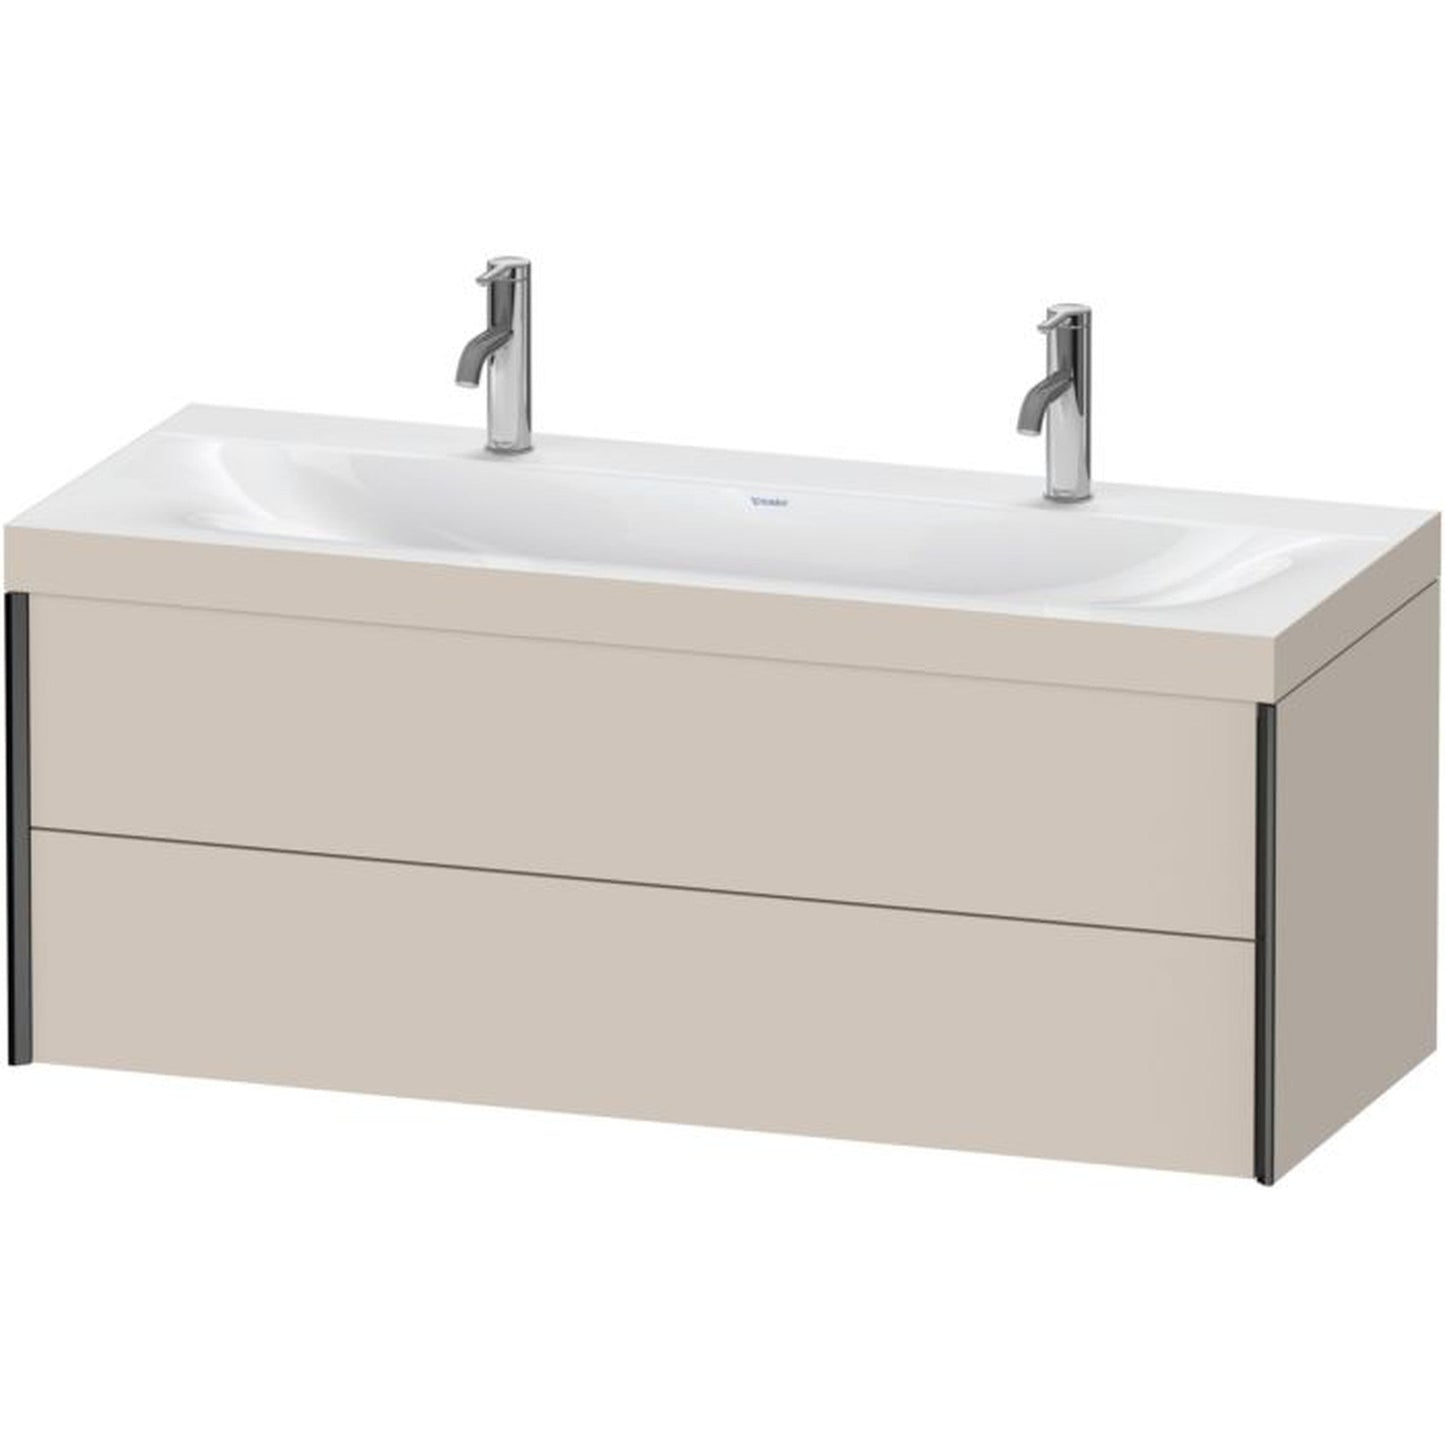 WoodBridge B0012 59" White Acrylic Freestanding Soaking Bathtub With Chrome Drain, Overflow, F0071CHRD Tub Filler and Caddy Tray